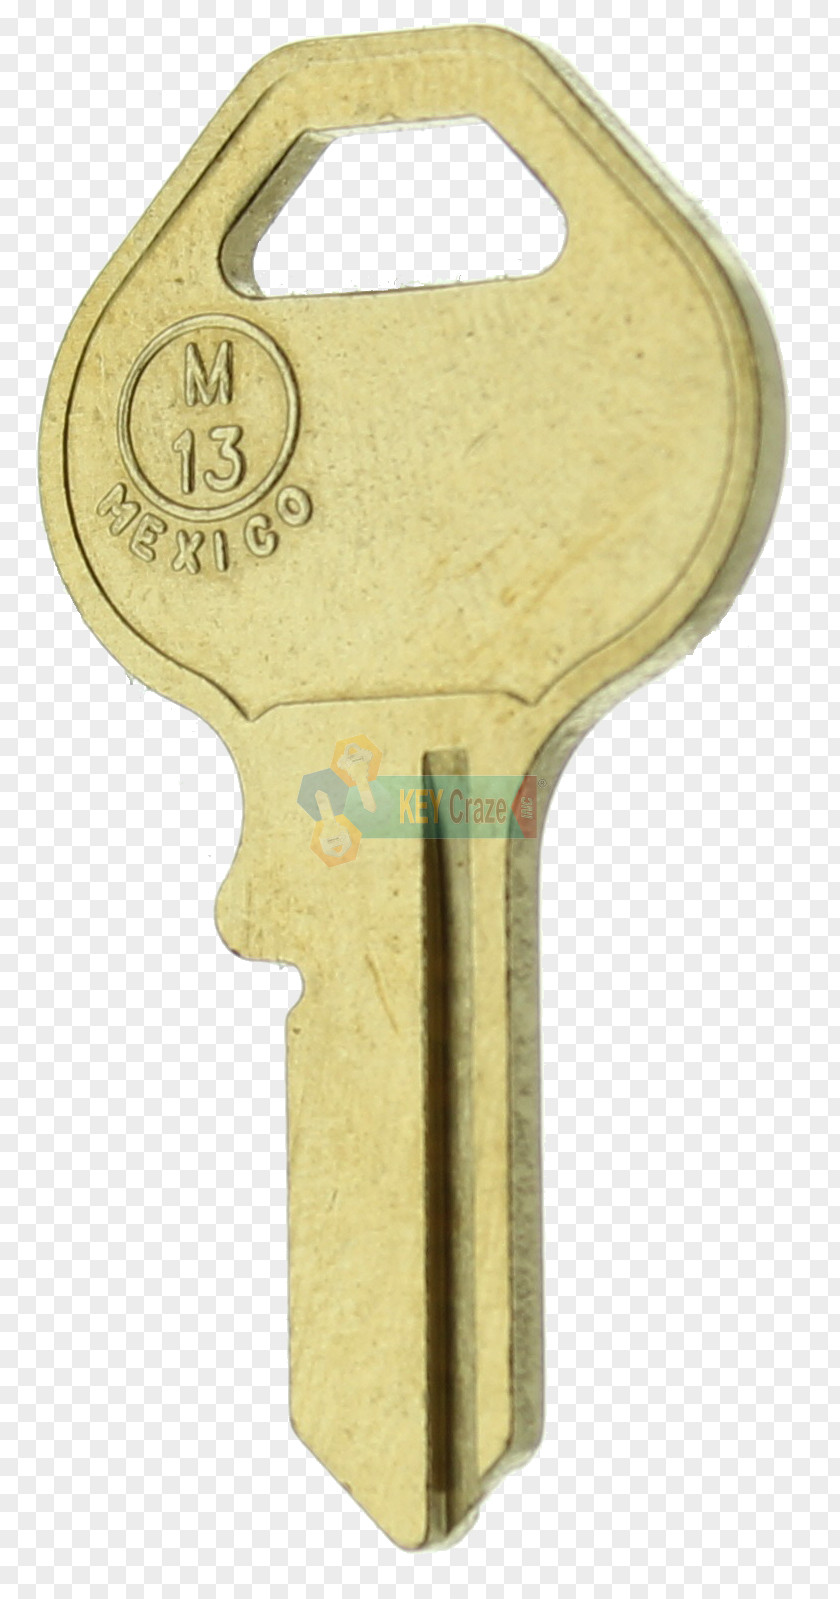 Brass Key Blank Craze Inc Wholesale PNG